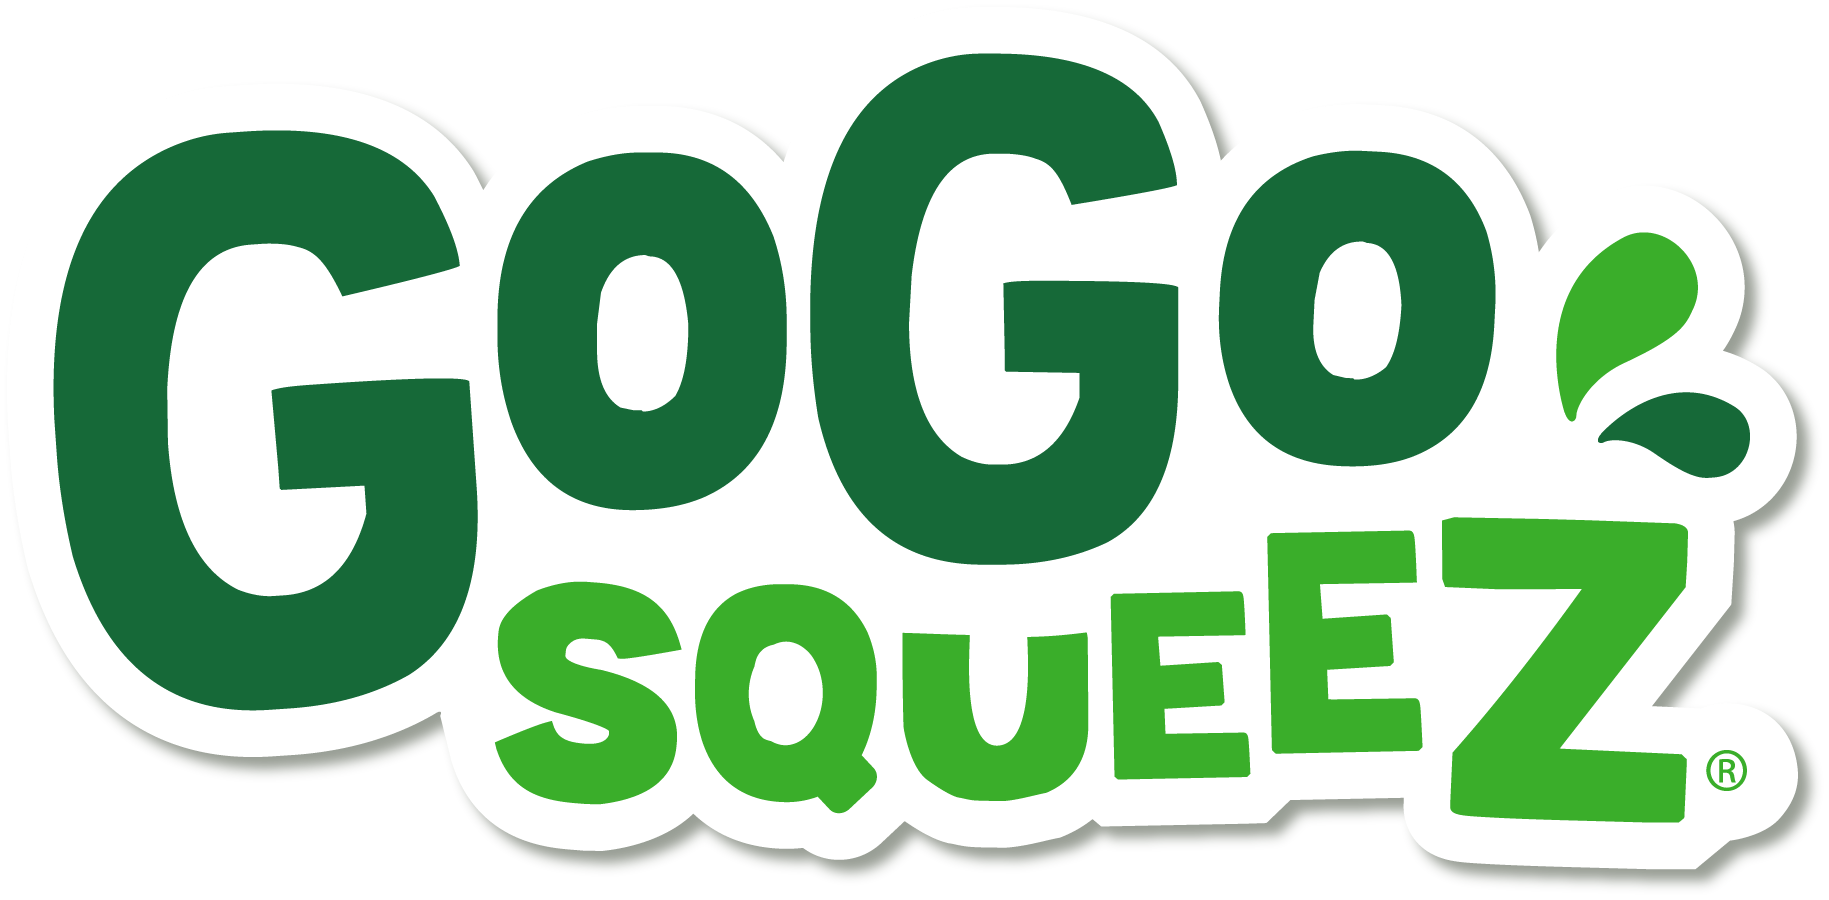 GoGo SqueeZ logo